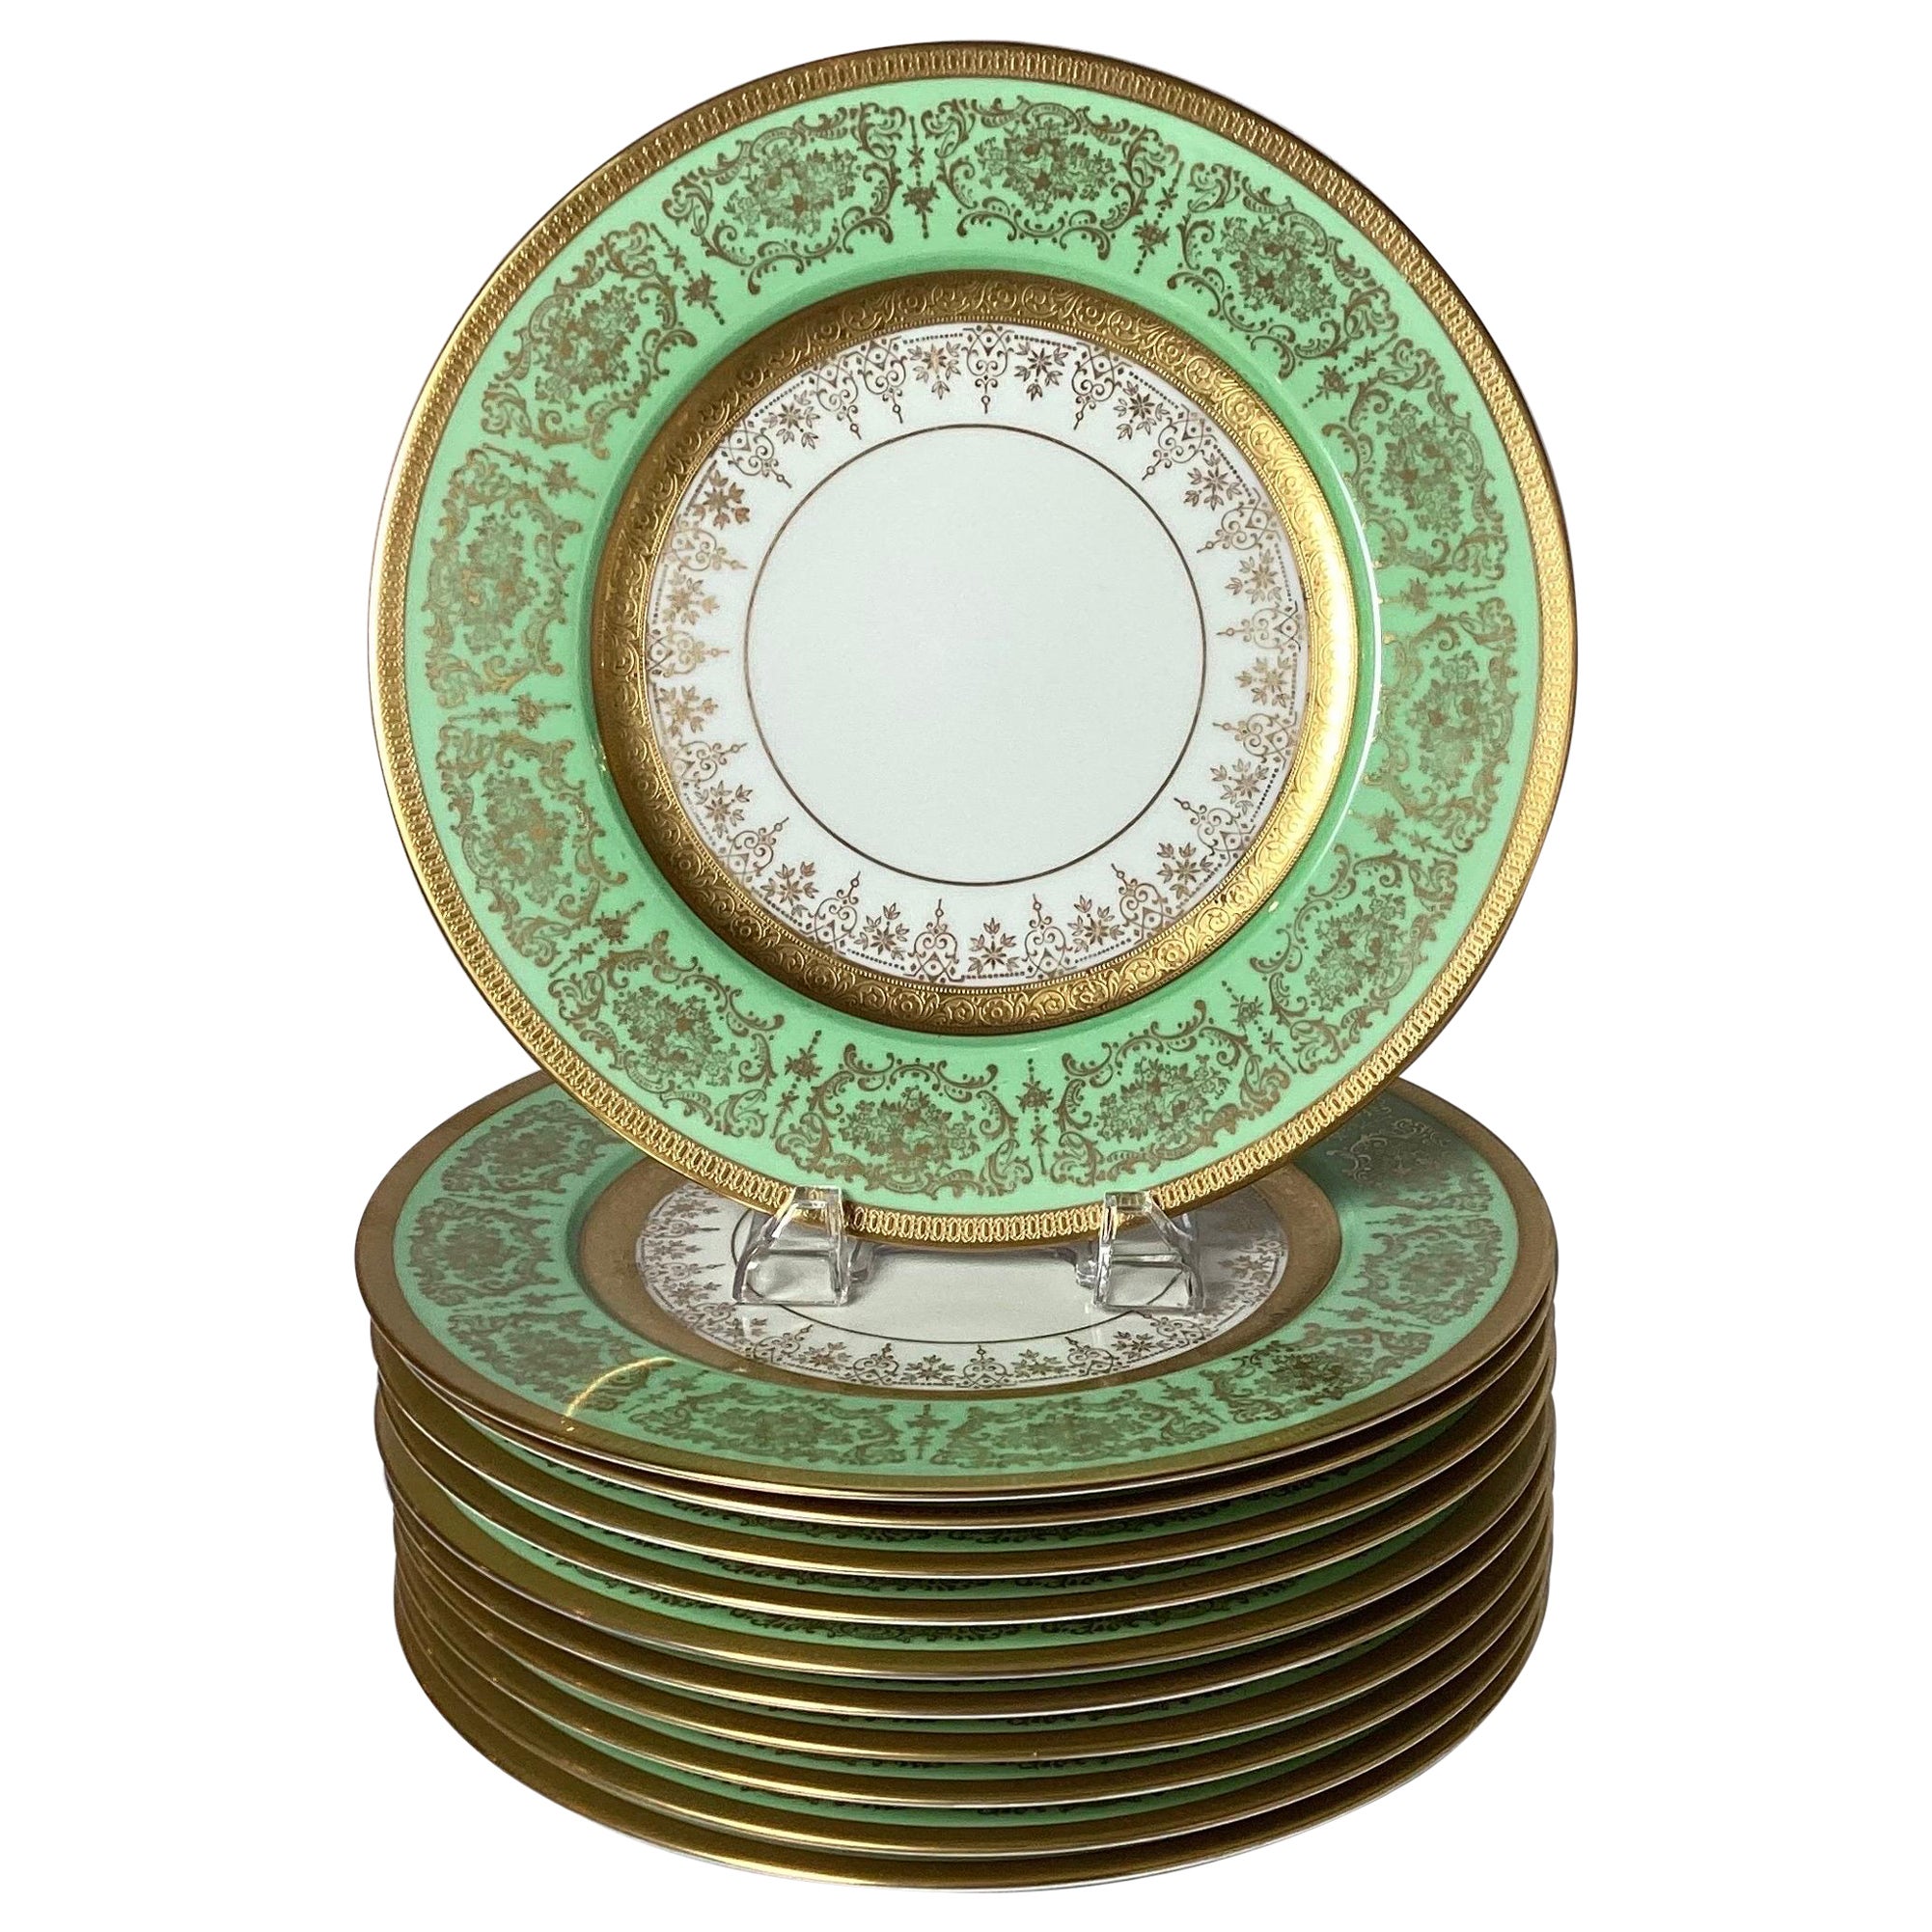 Elegant Set of 11 Apple Green and Gilt Service Plates